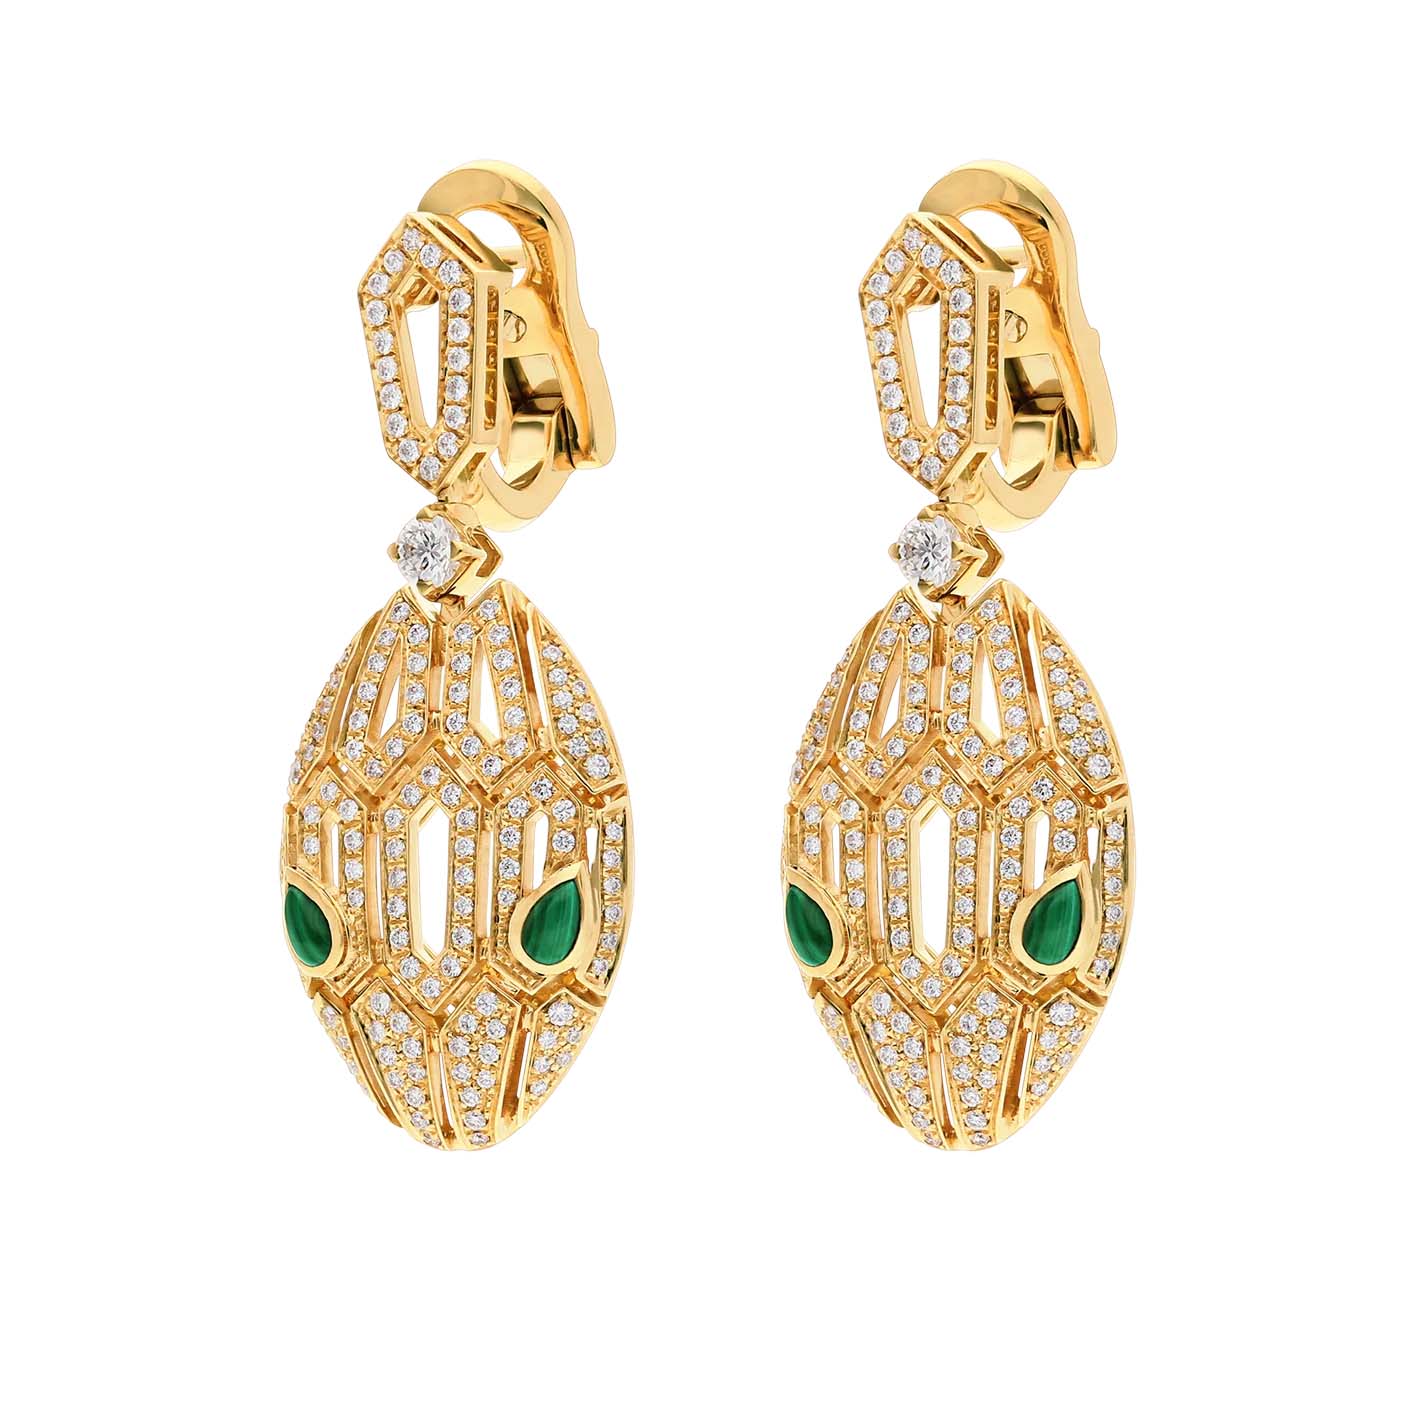 Wholesale 18k yellow gold OEM/ODM Jewelry earrings set with pavé diamonds and malachite eyes